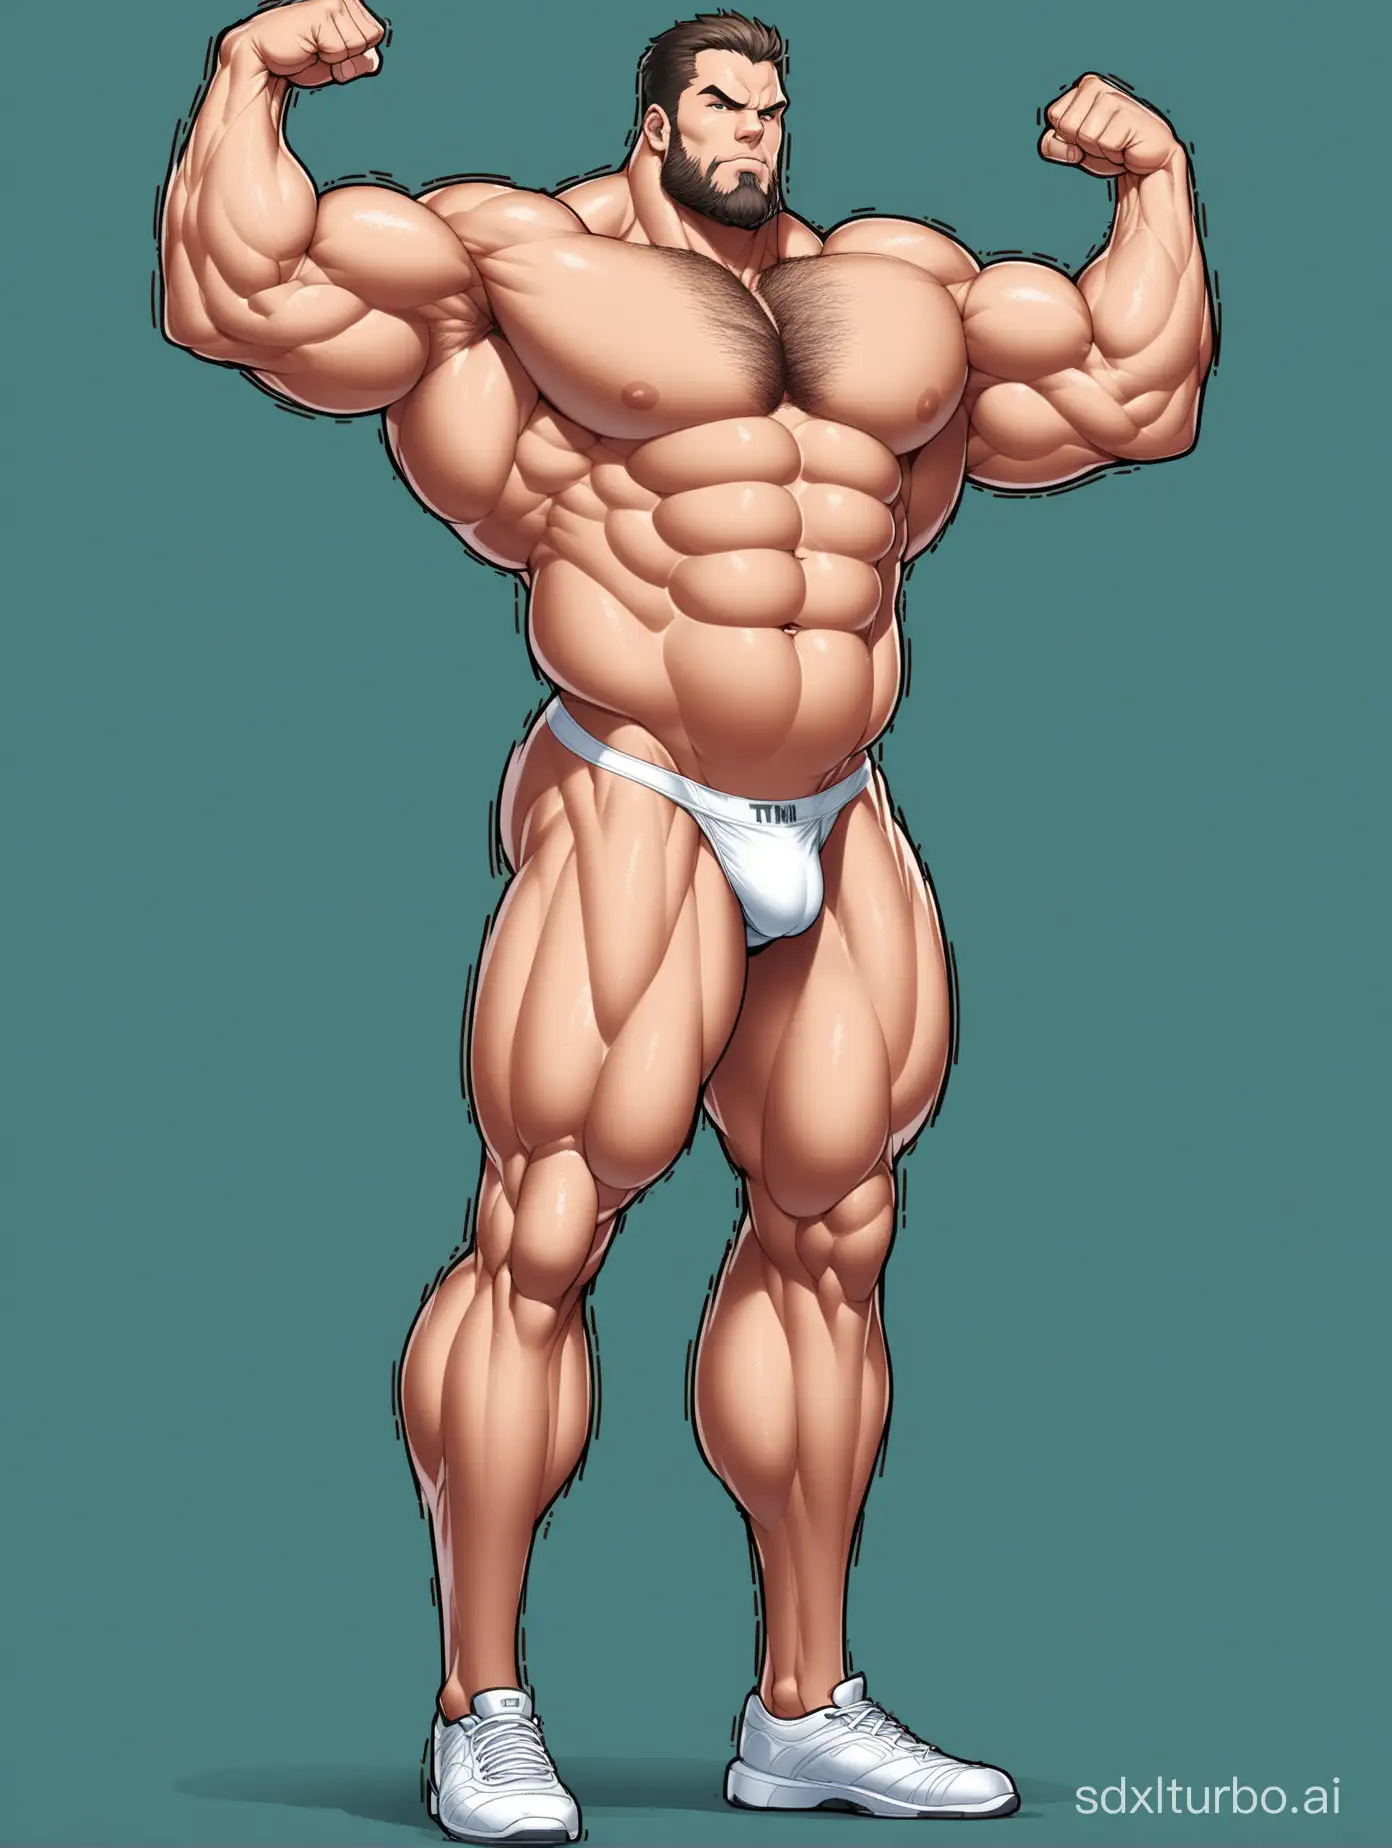 Massive-Muscle-Stud-Showing-off-Huge-Biceps-in-Underwear